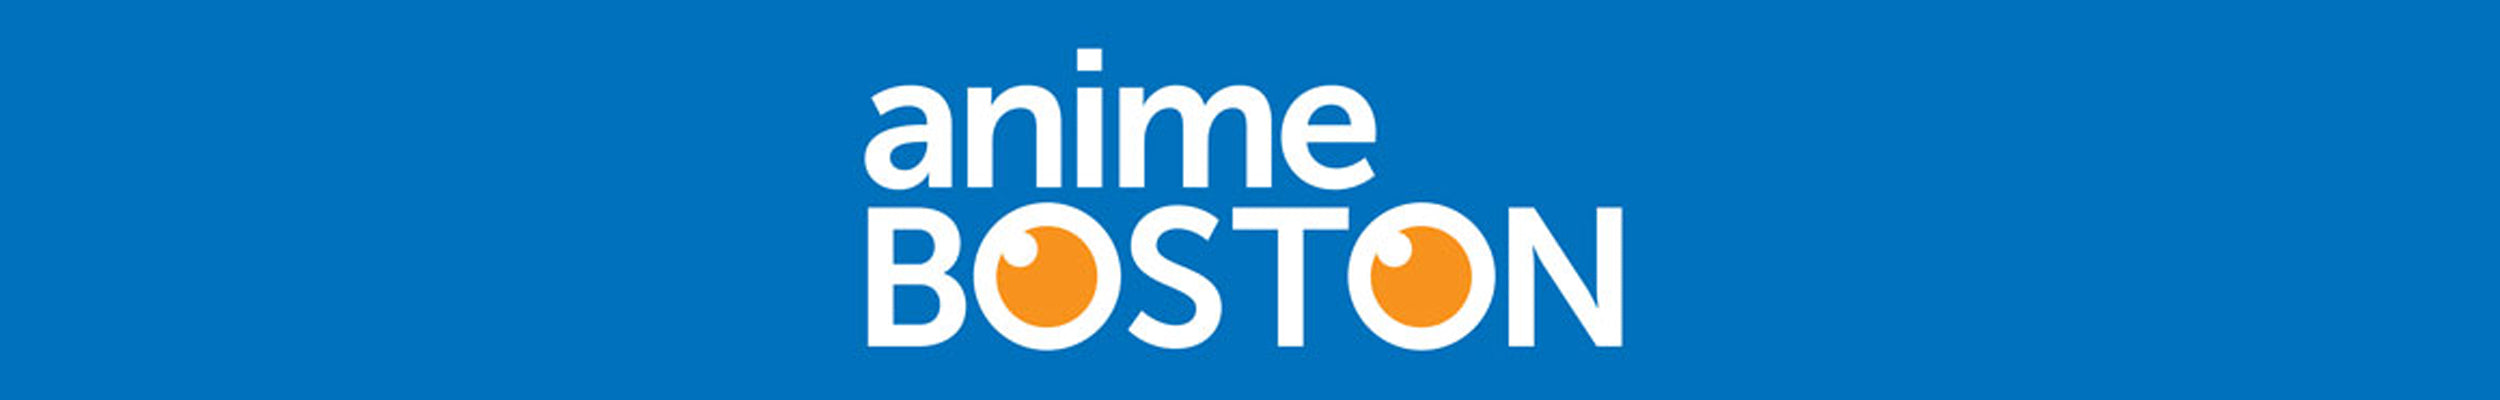 animeboston